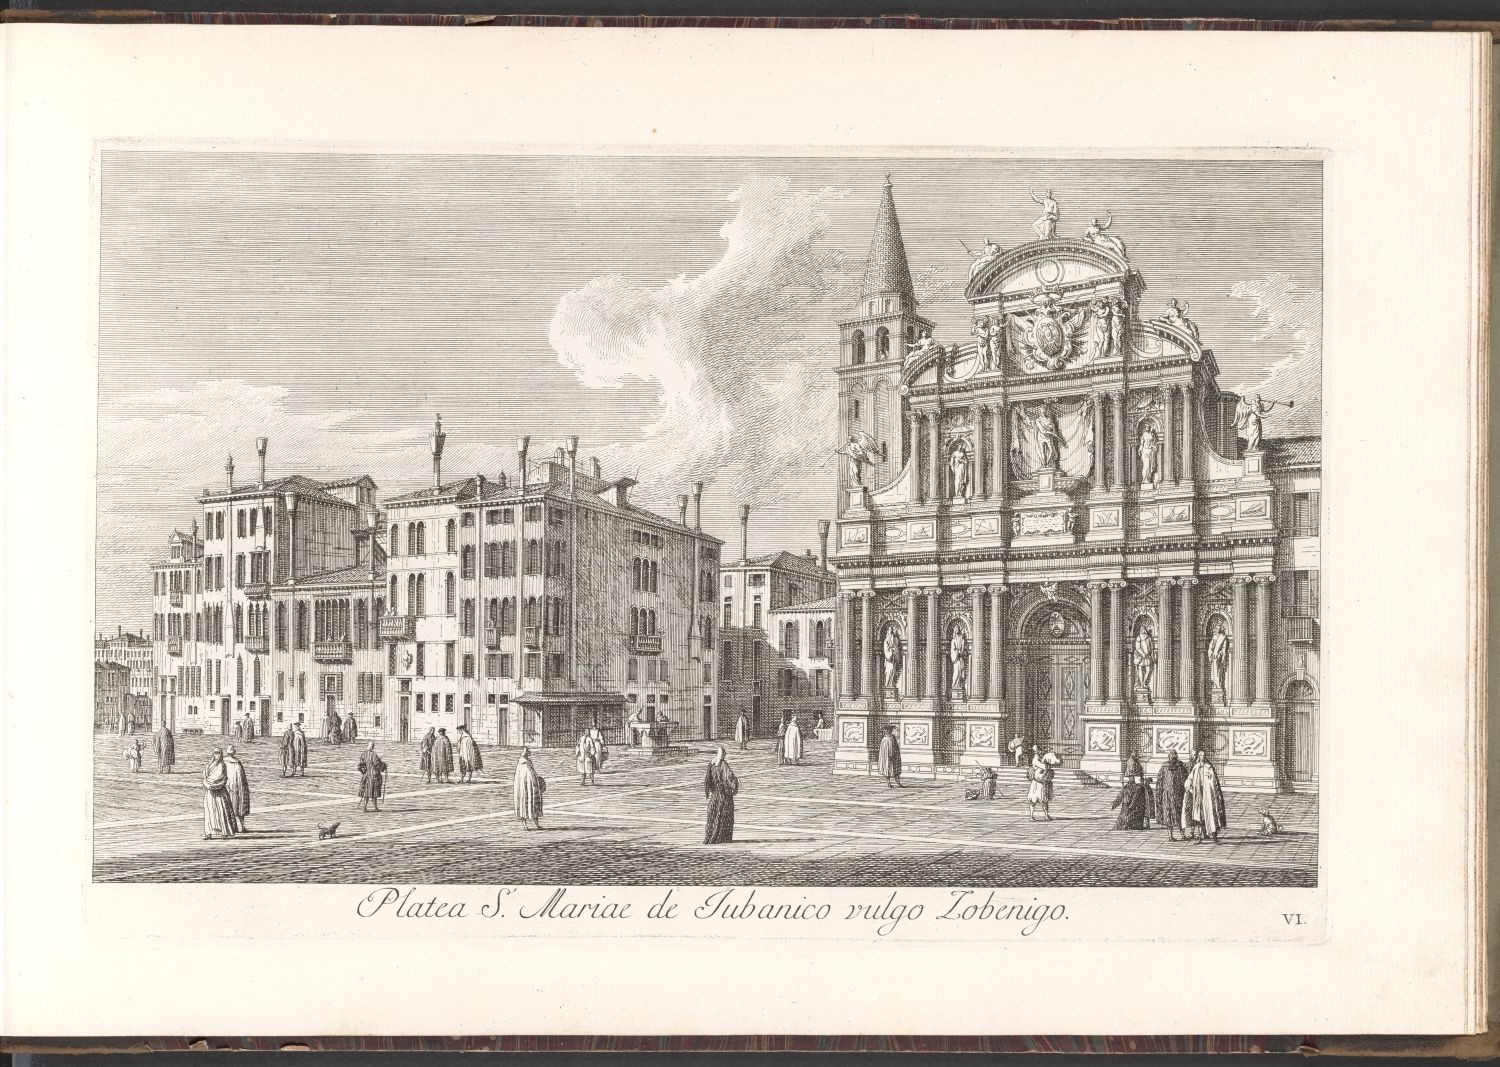 Venedig, VI. Platea S. Mariae de Jubanico vulgo Lobenigo. (Stiftung Händelhaus, Halle CC BY-NC-SA)